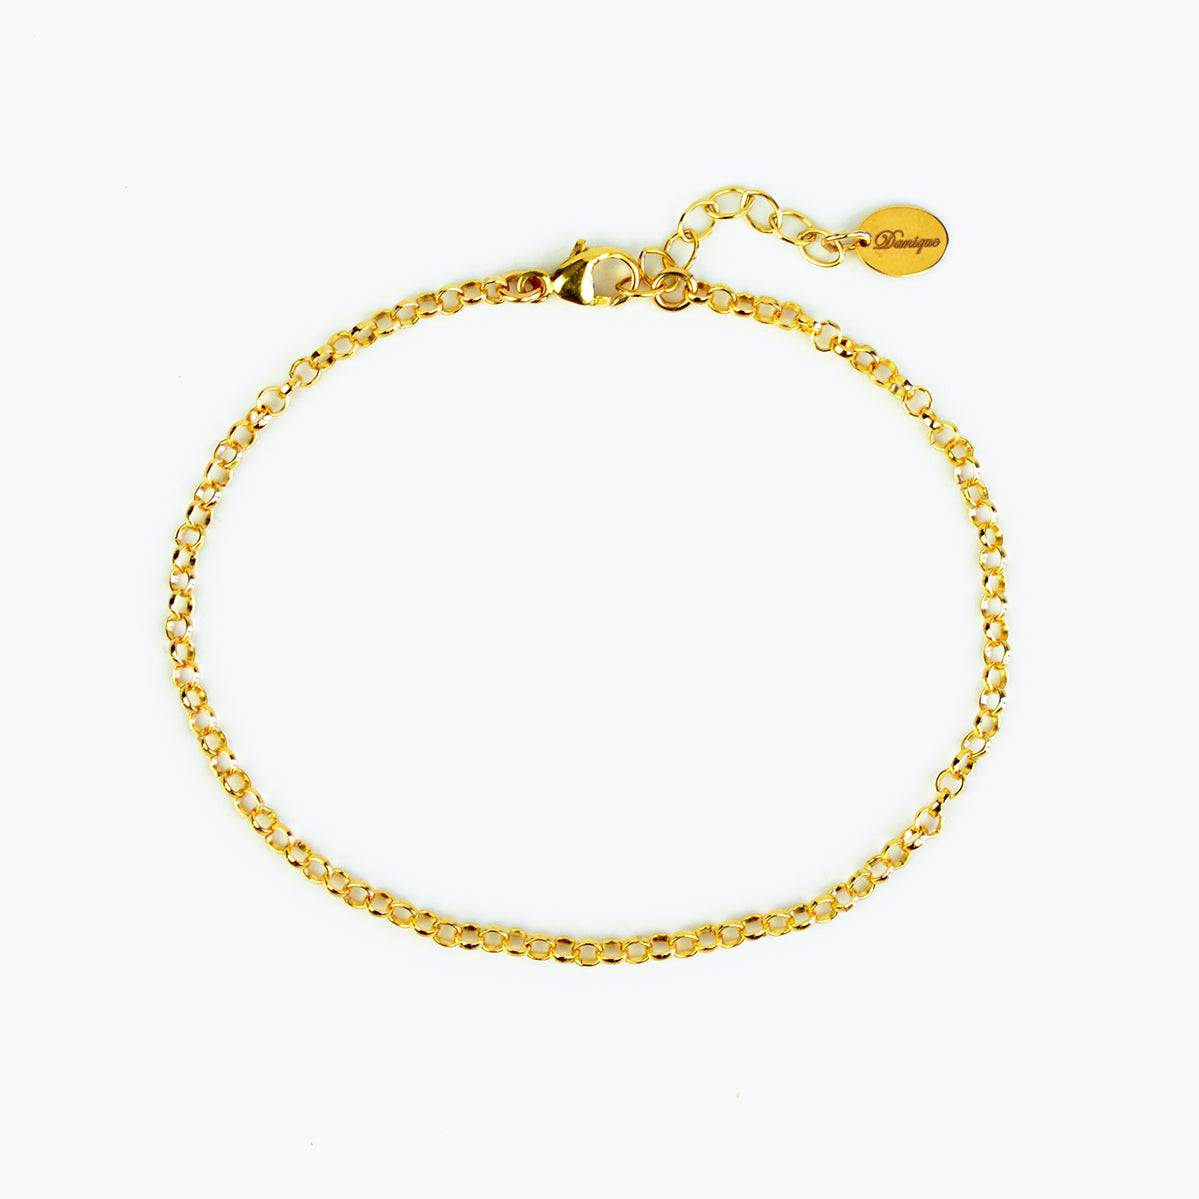 Curb Chain Bracelet in 18K Rose Gold with Diamonds, 7mm | David Yurman